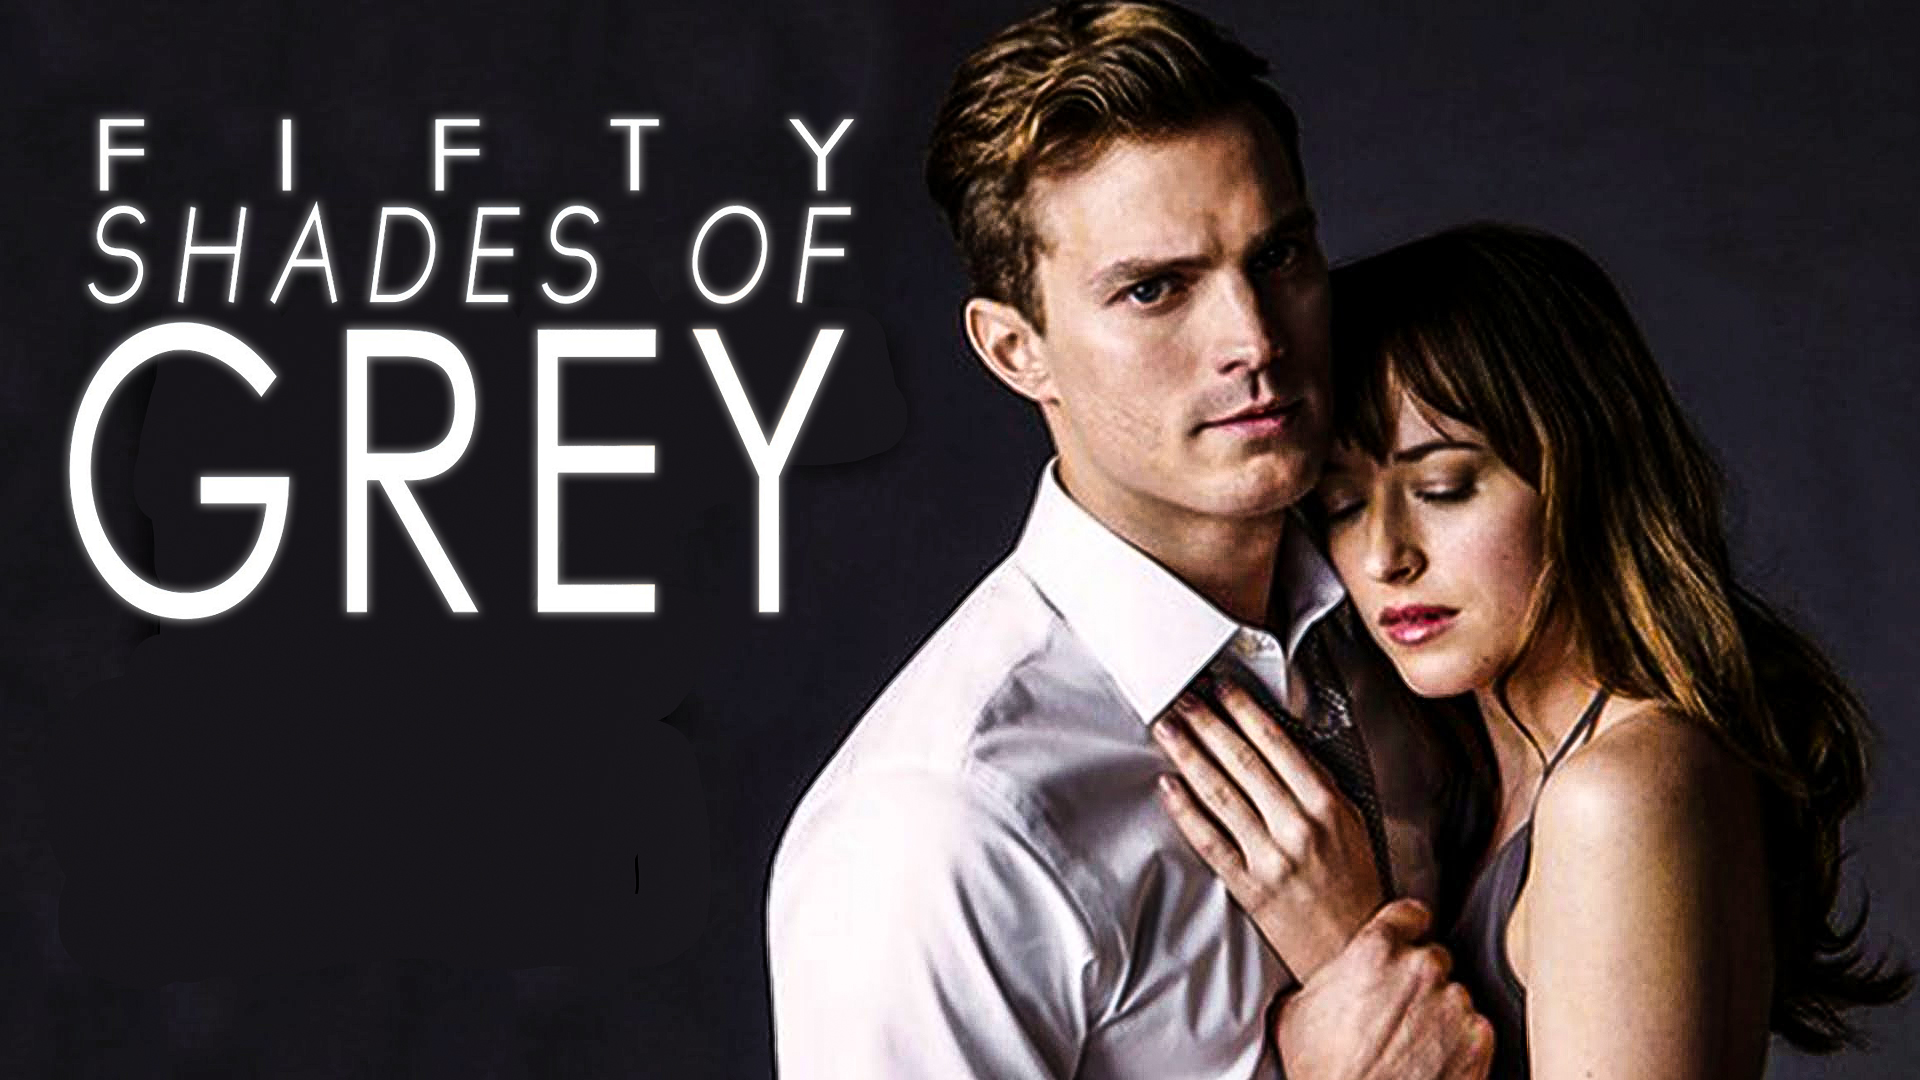 Fifty Shades of Grey : Le manuscrit volé, les aventures de Christian Grey menacées ?